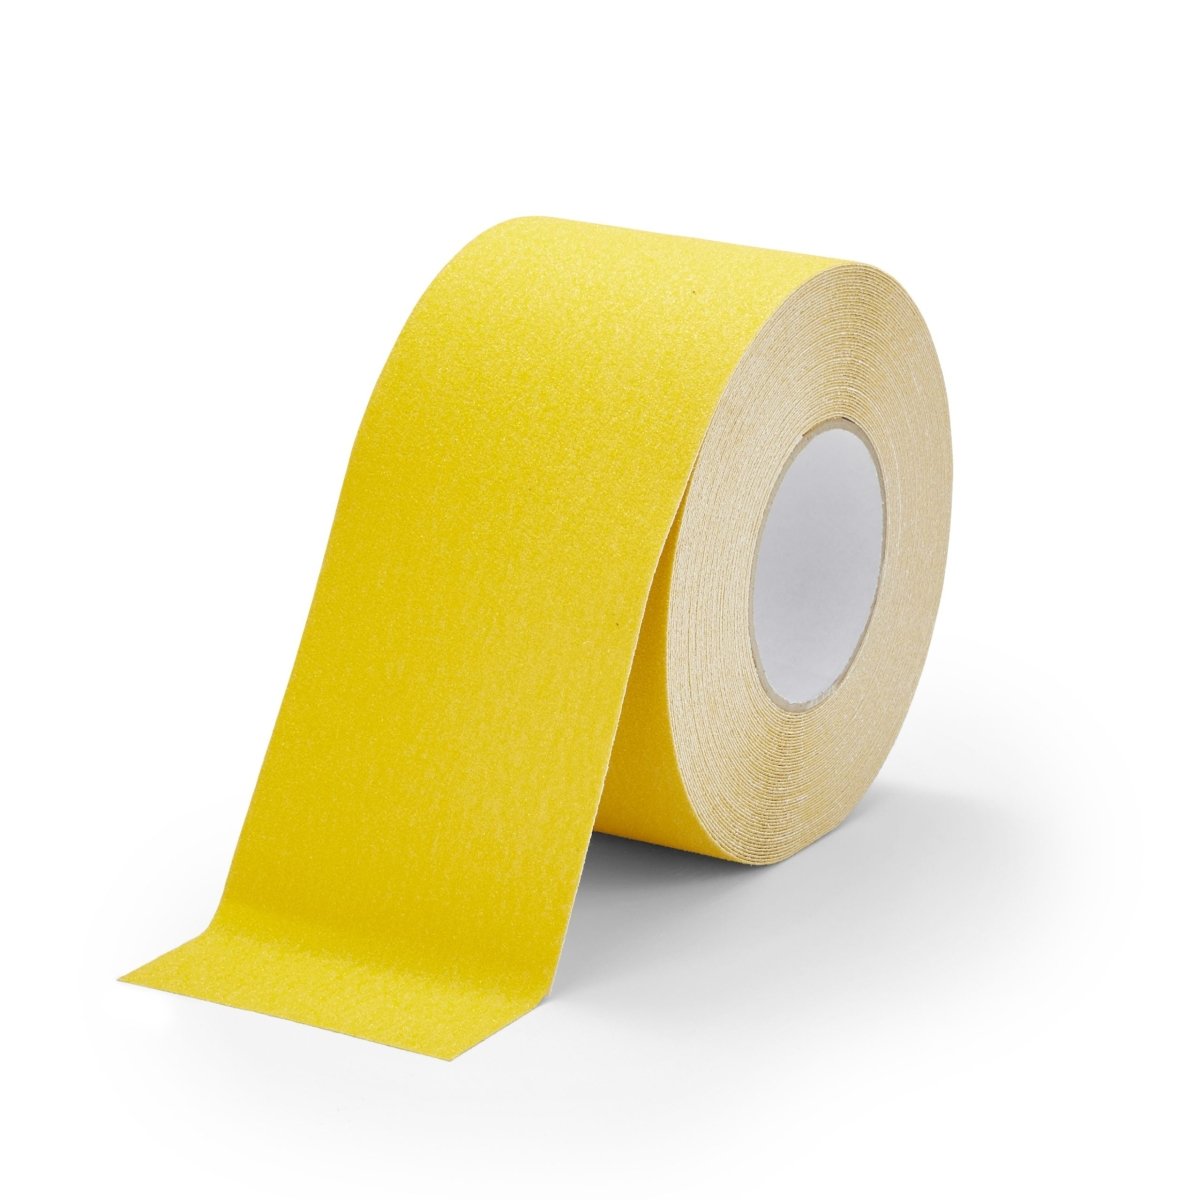 Course Grade Anti Slip Tape Rolls 18m - Slips Away - H3402Y Safety-Grip Coarse - Yellow-100mm-1-1-1 -